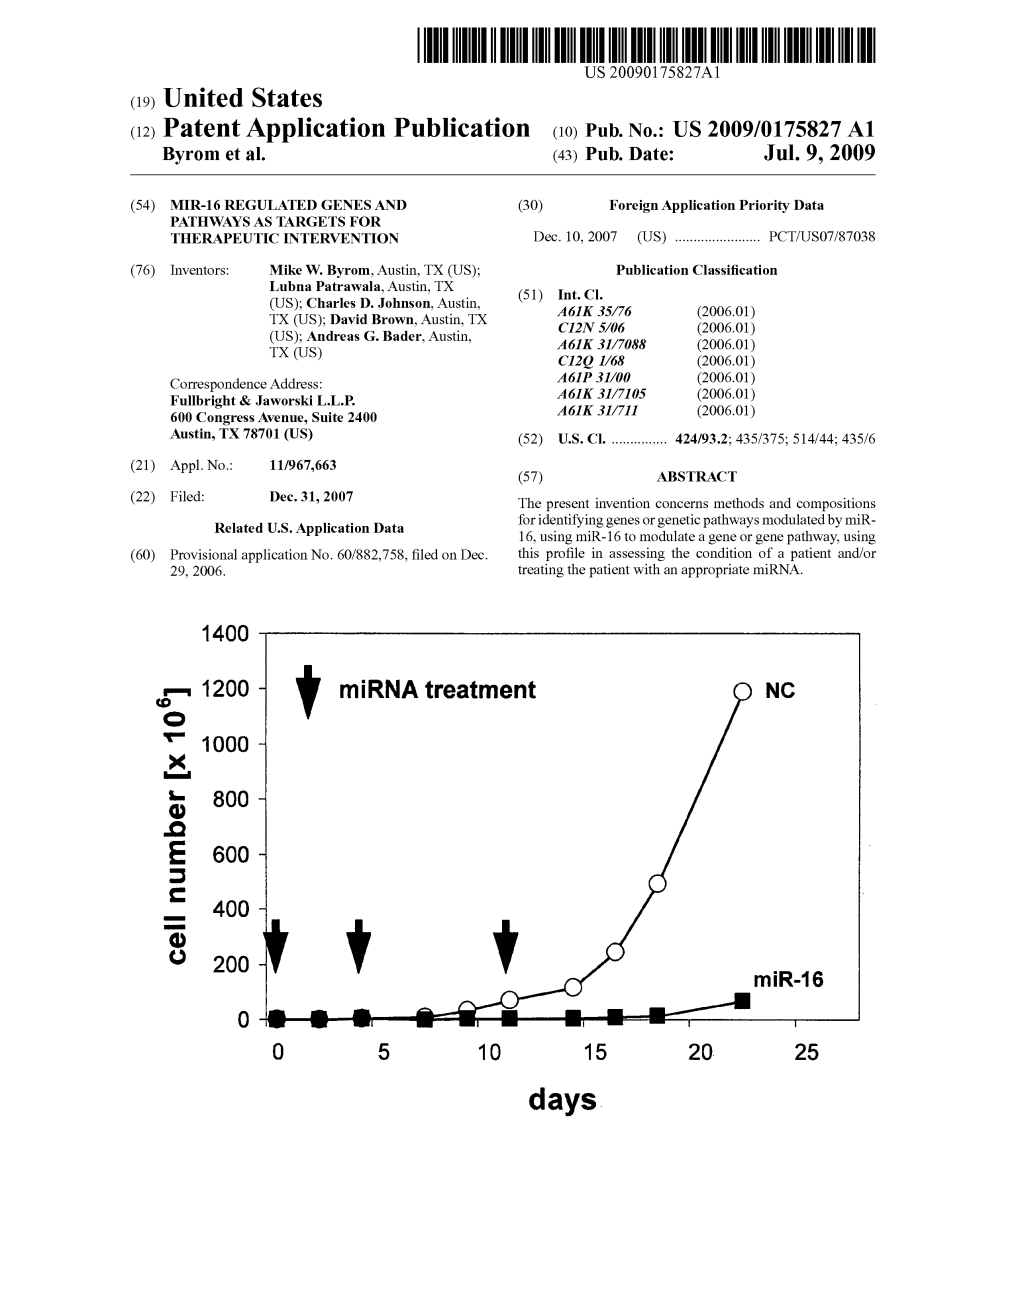 G- 1200 W Mirna Treatment GD VT 1000 & 5 800 -C E 600 =5 5 400 Q) © 200 Patent Application Publication Jul